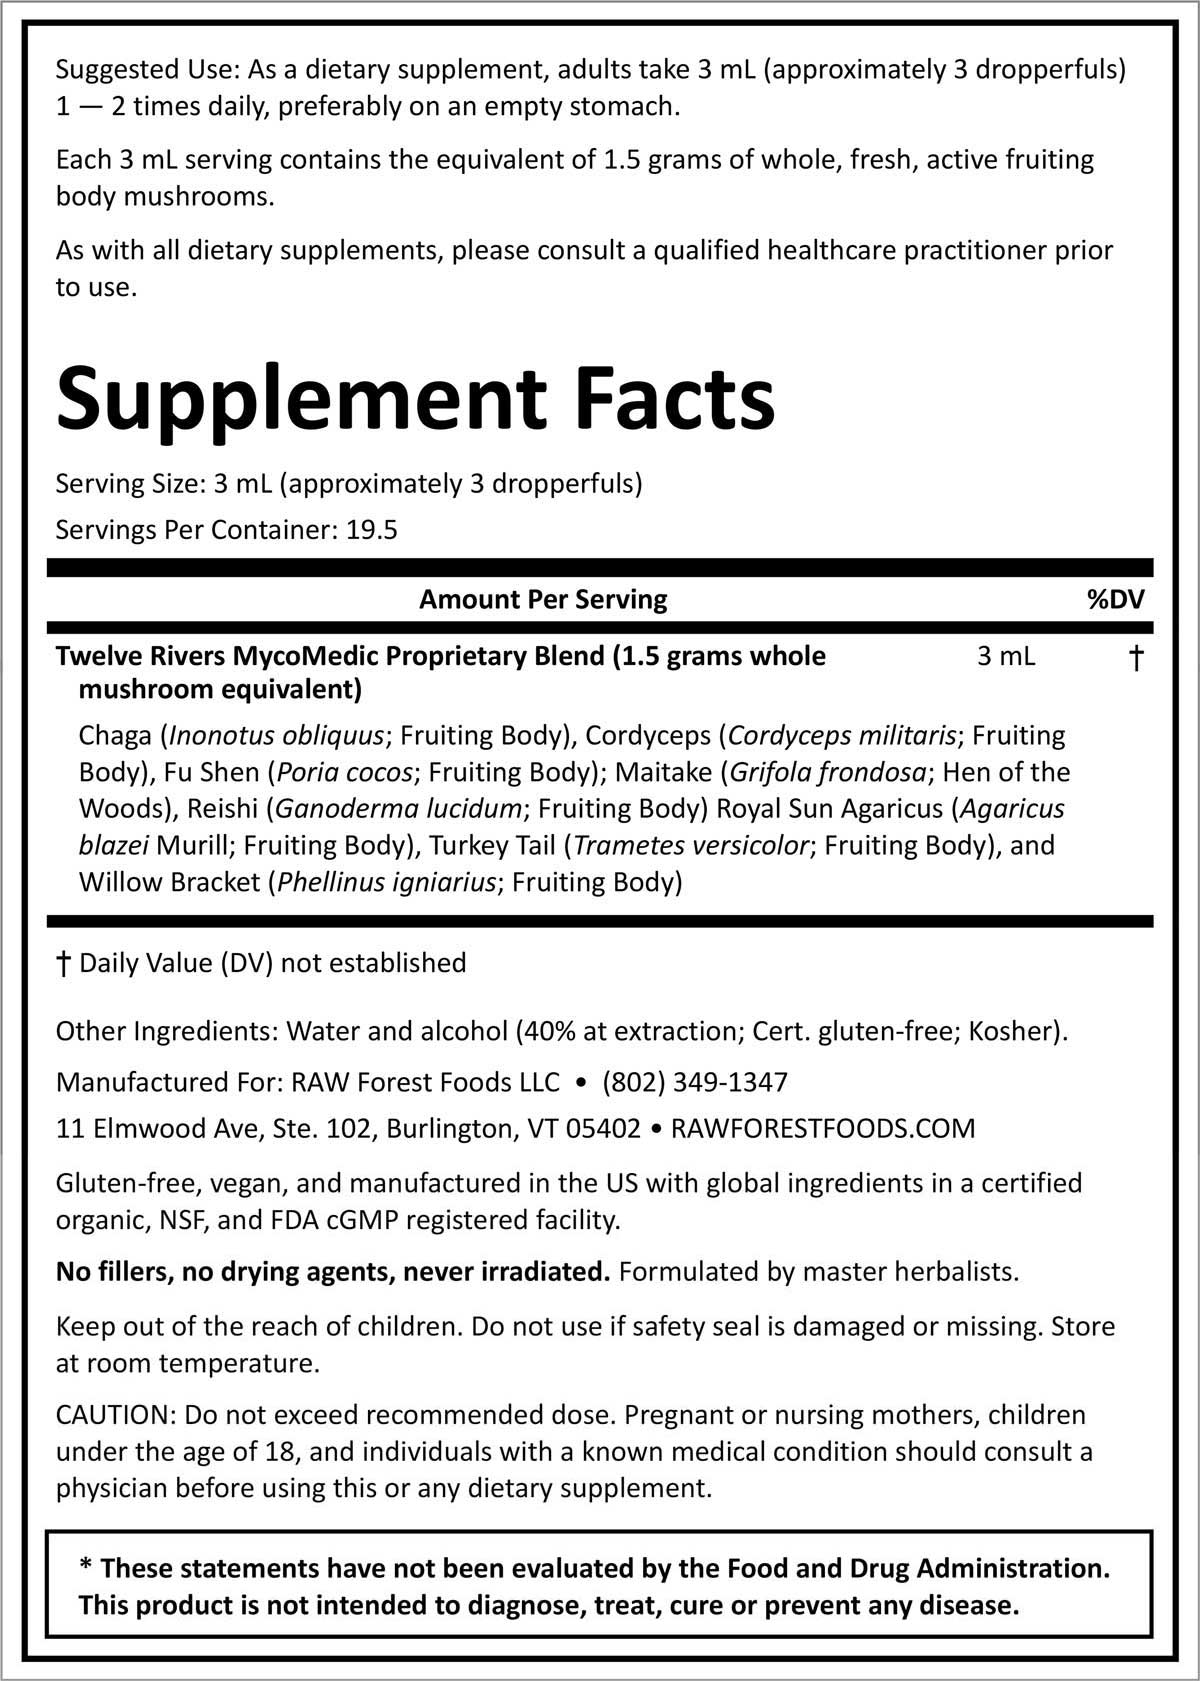 Twelve Rivers MycoMedic Tincture Supplement Facts 2 Ounce Bottle